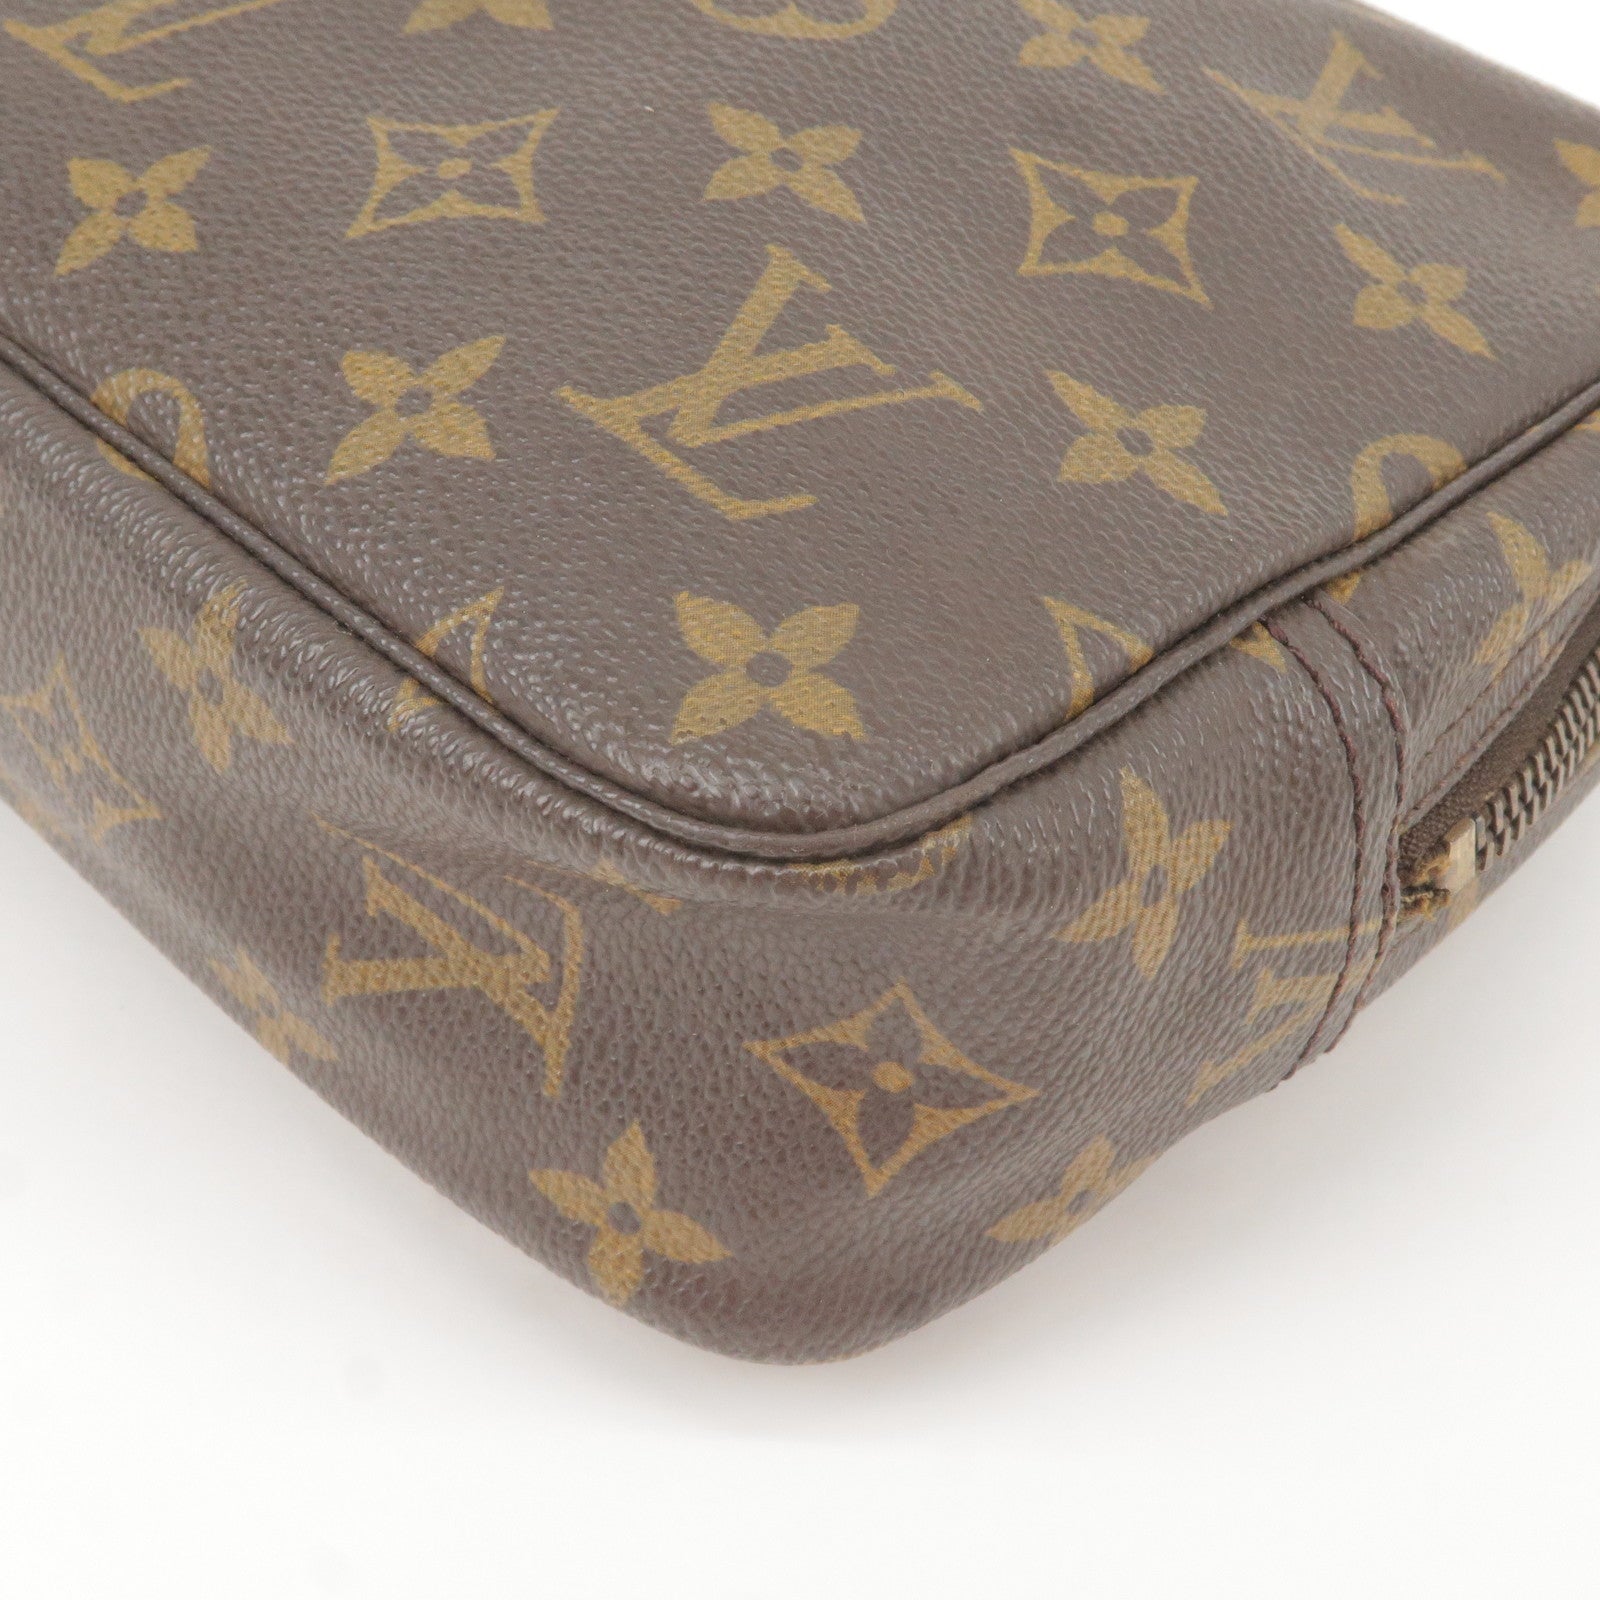 Louis Vuitton, Bags, Authentic Louis Vuitton Trousse 23 Clutch Crossbody  Bag With Chain